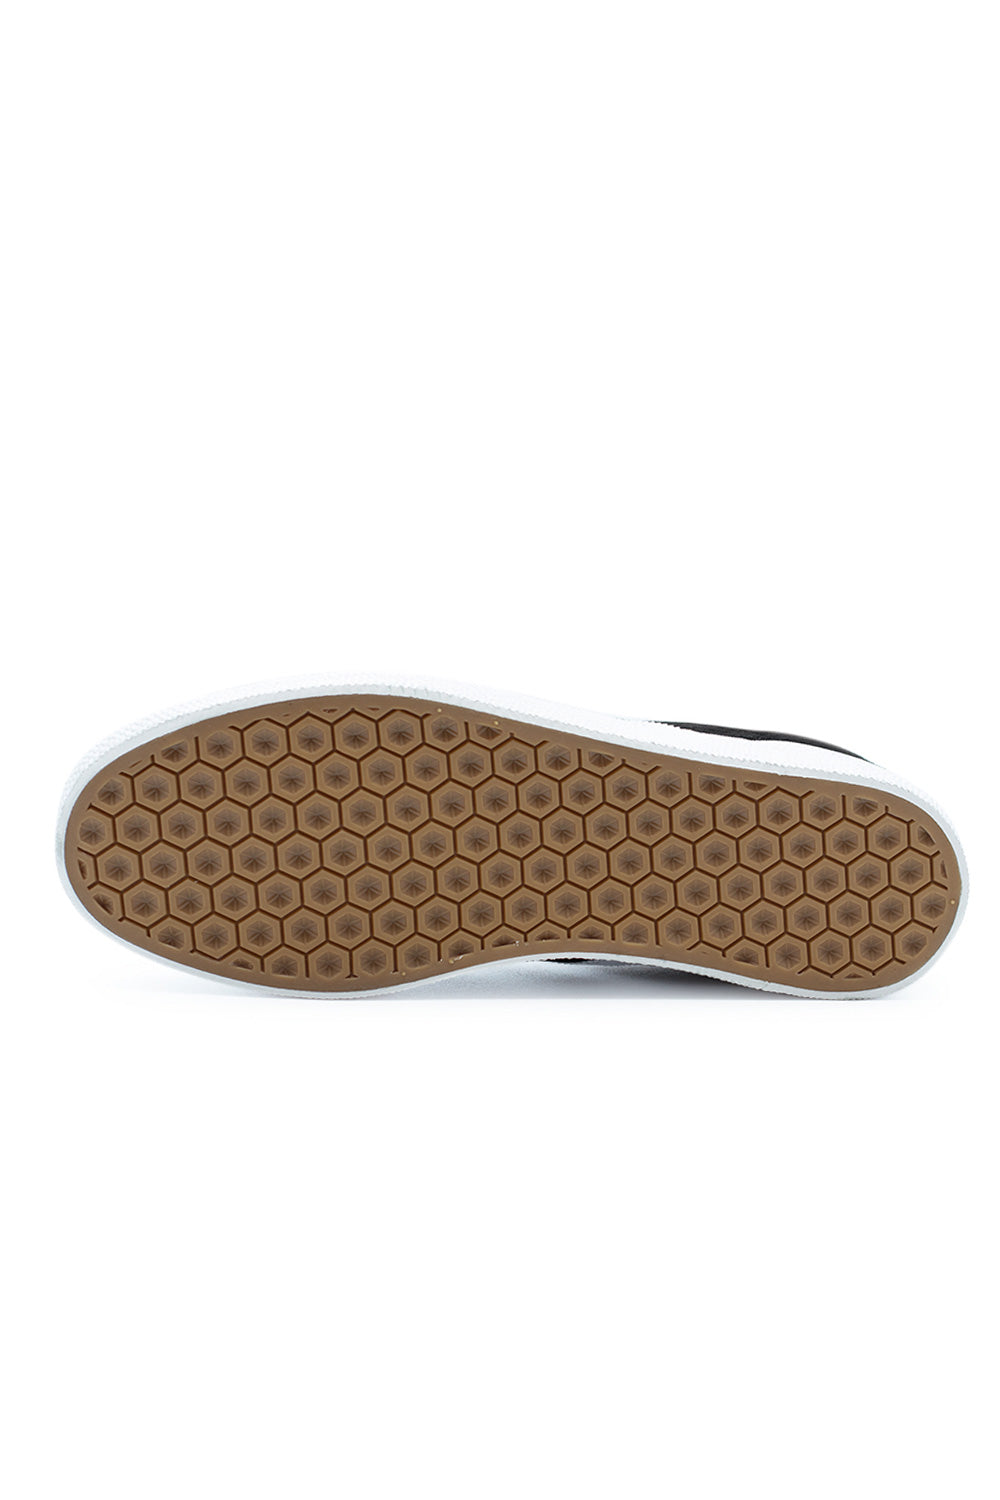 Adidas Gazelle ADV Shoe Core Black / Footwear White / Gold Metallic - BONKERS